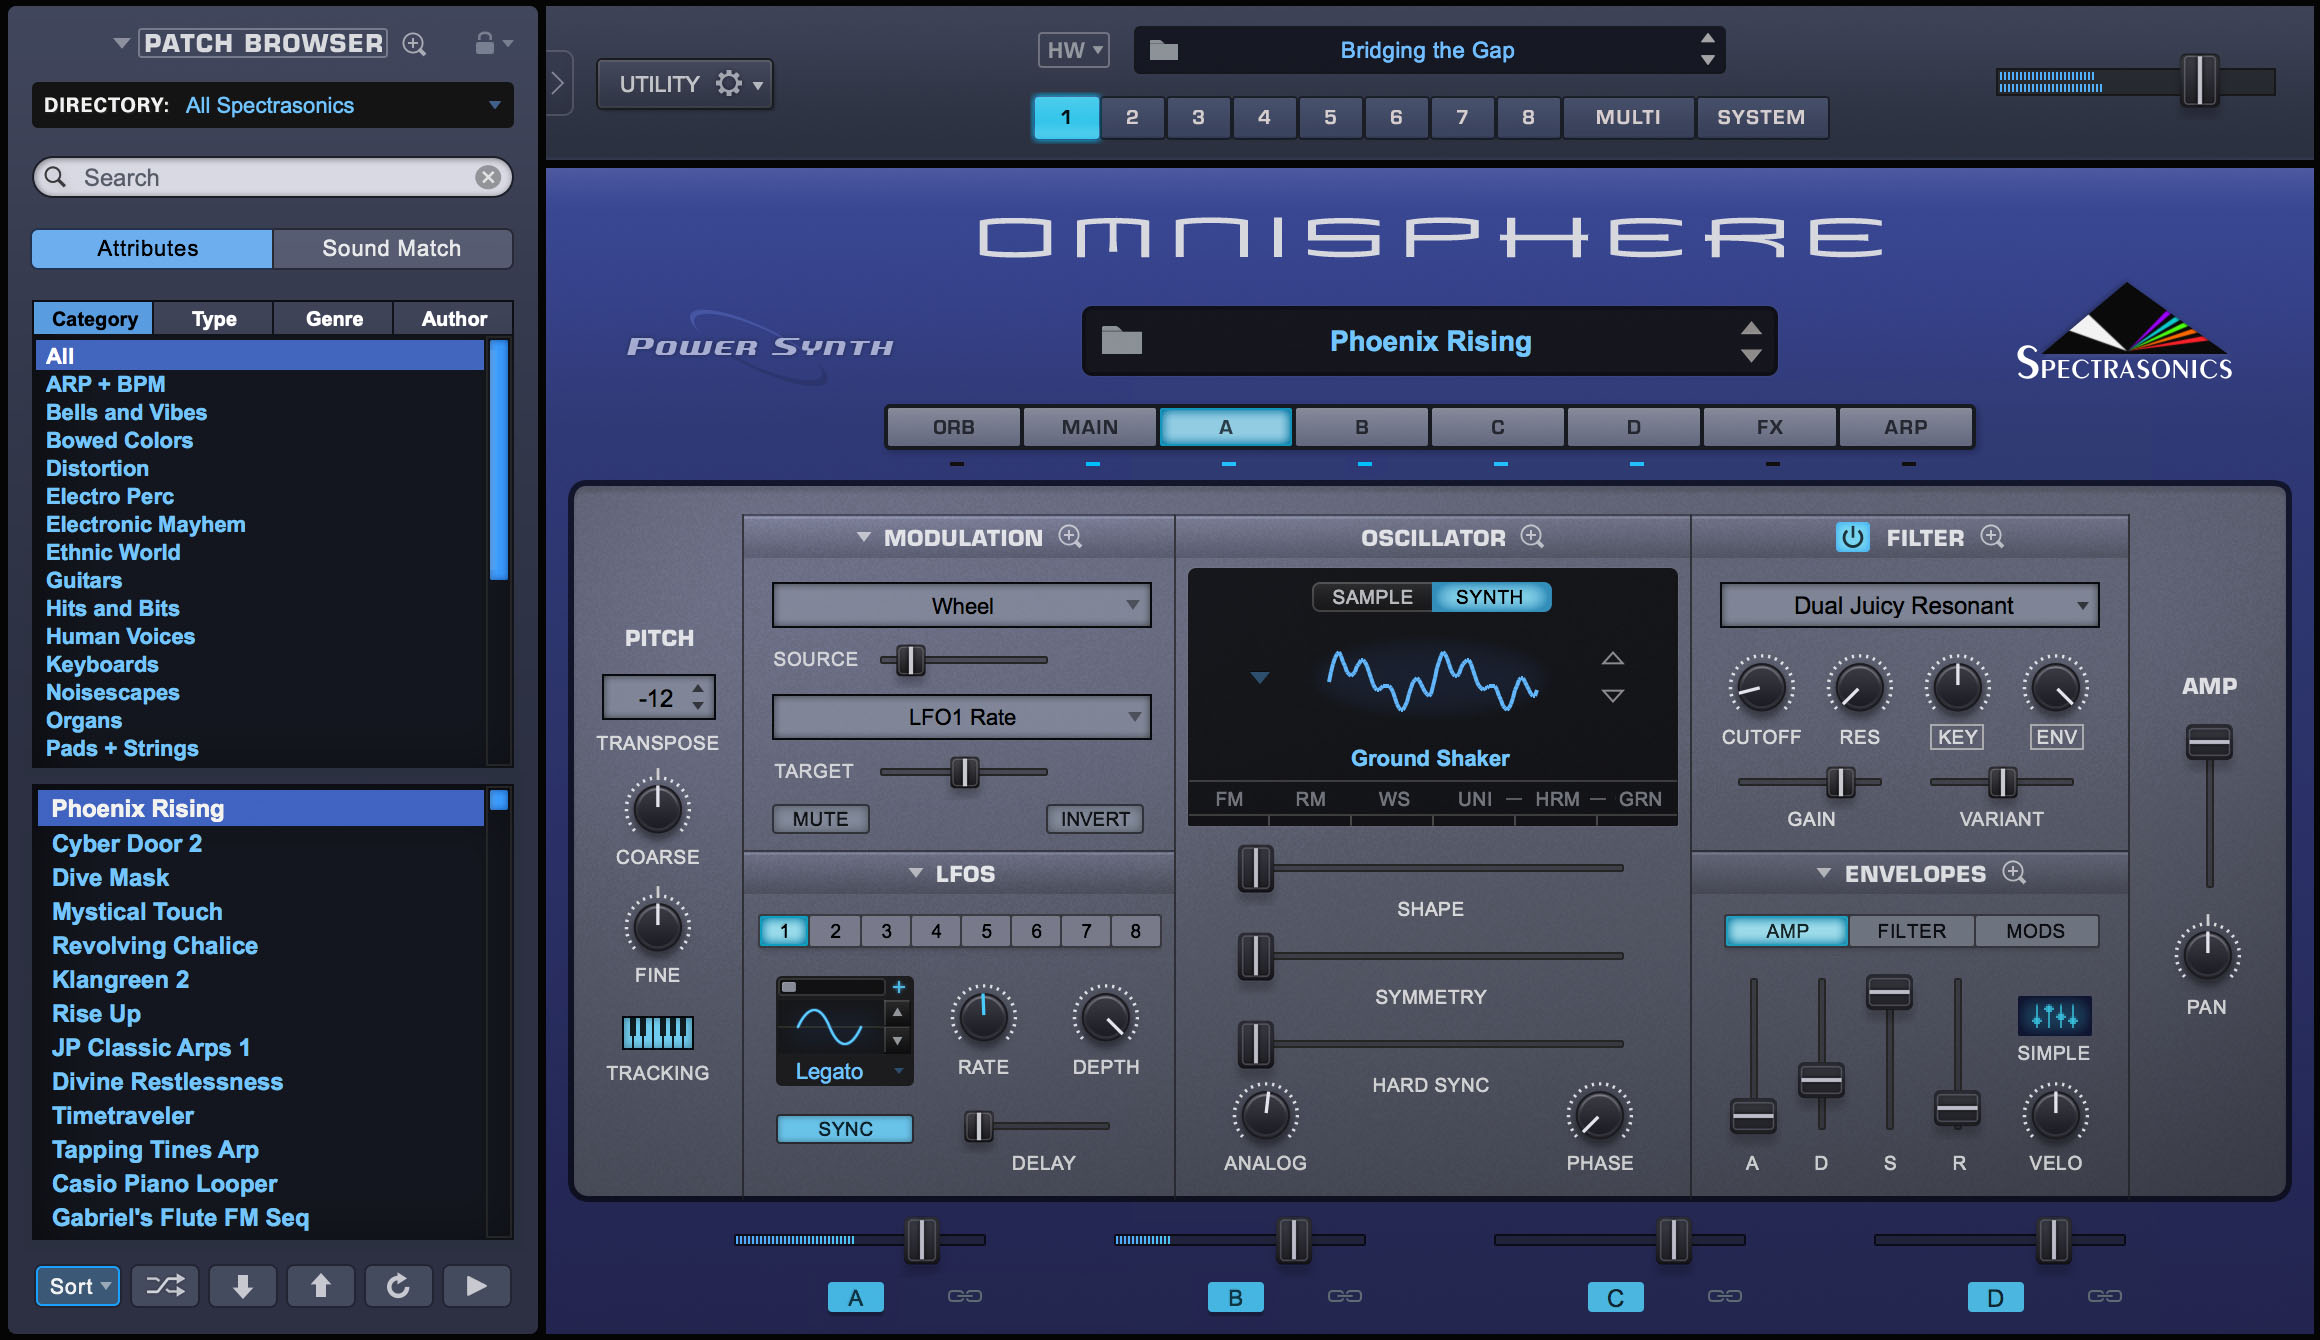 download and installation omnisphere 1